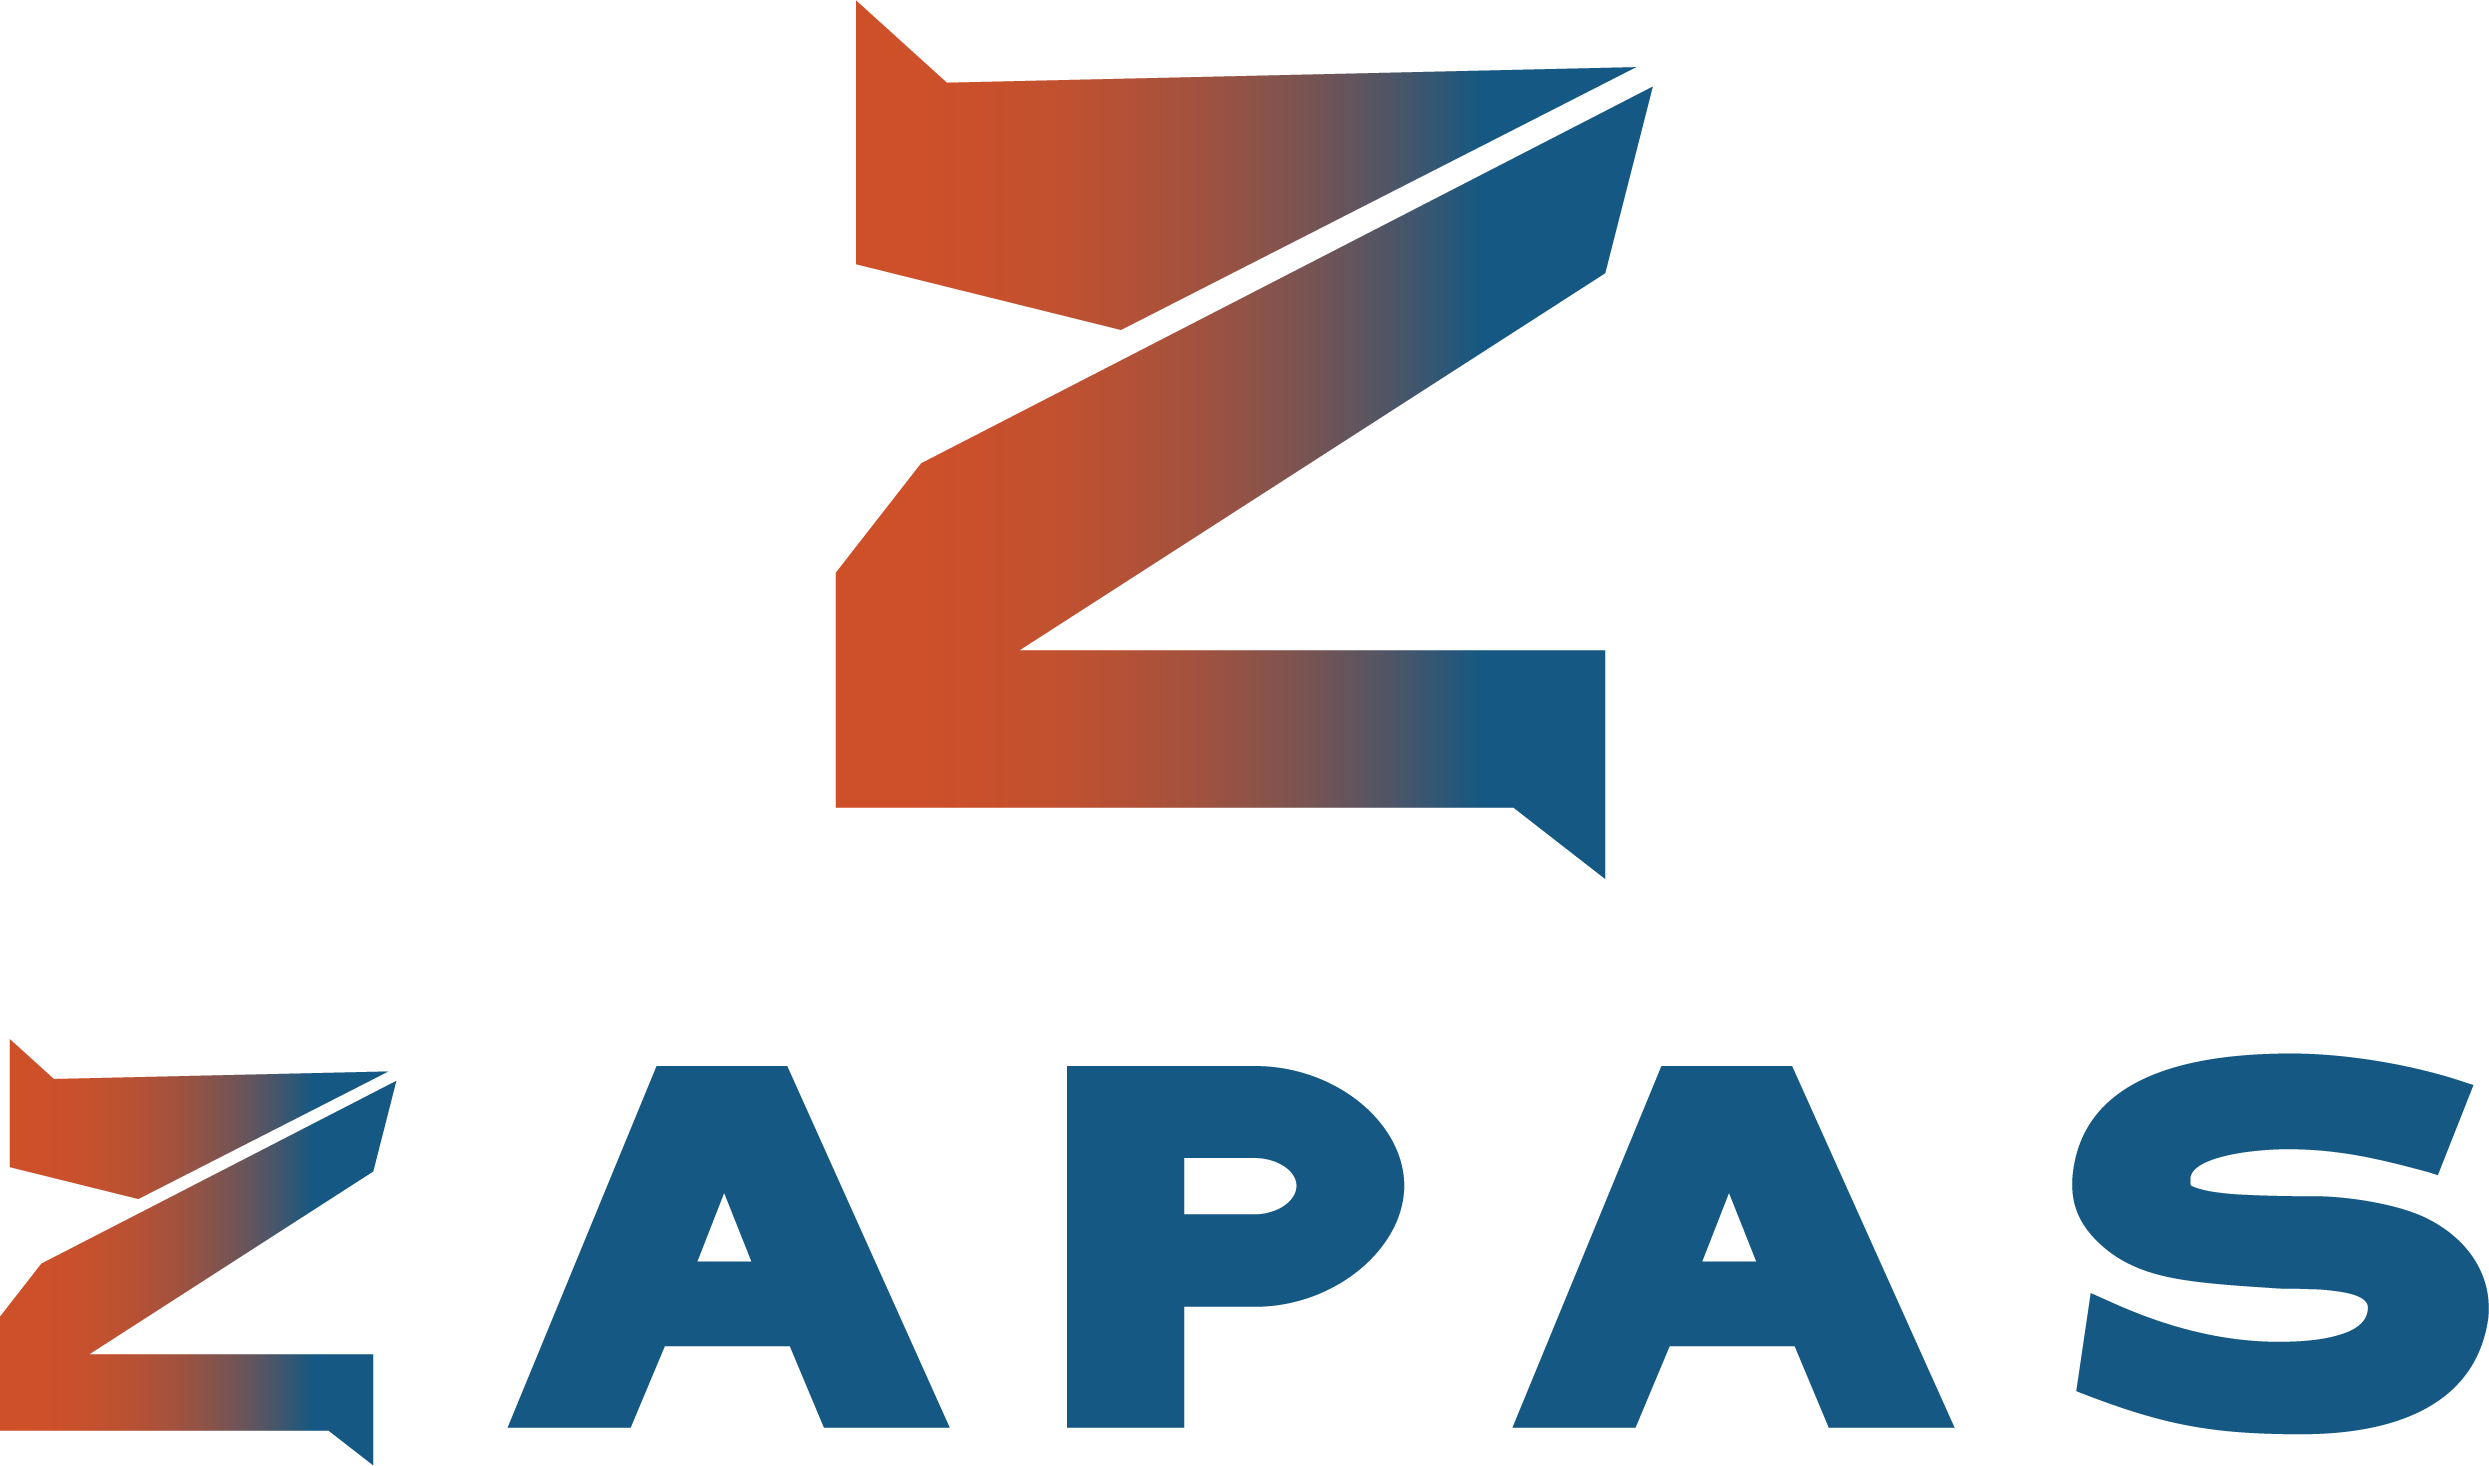 ZAPAS's logo